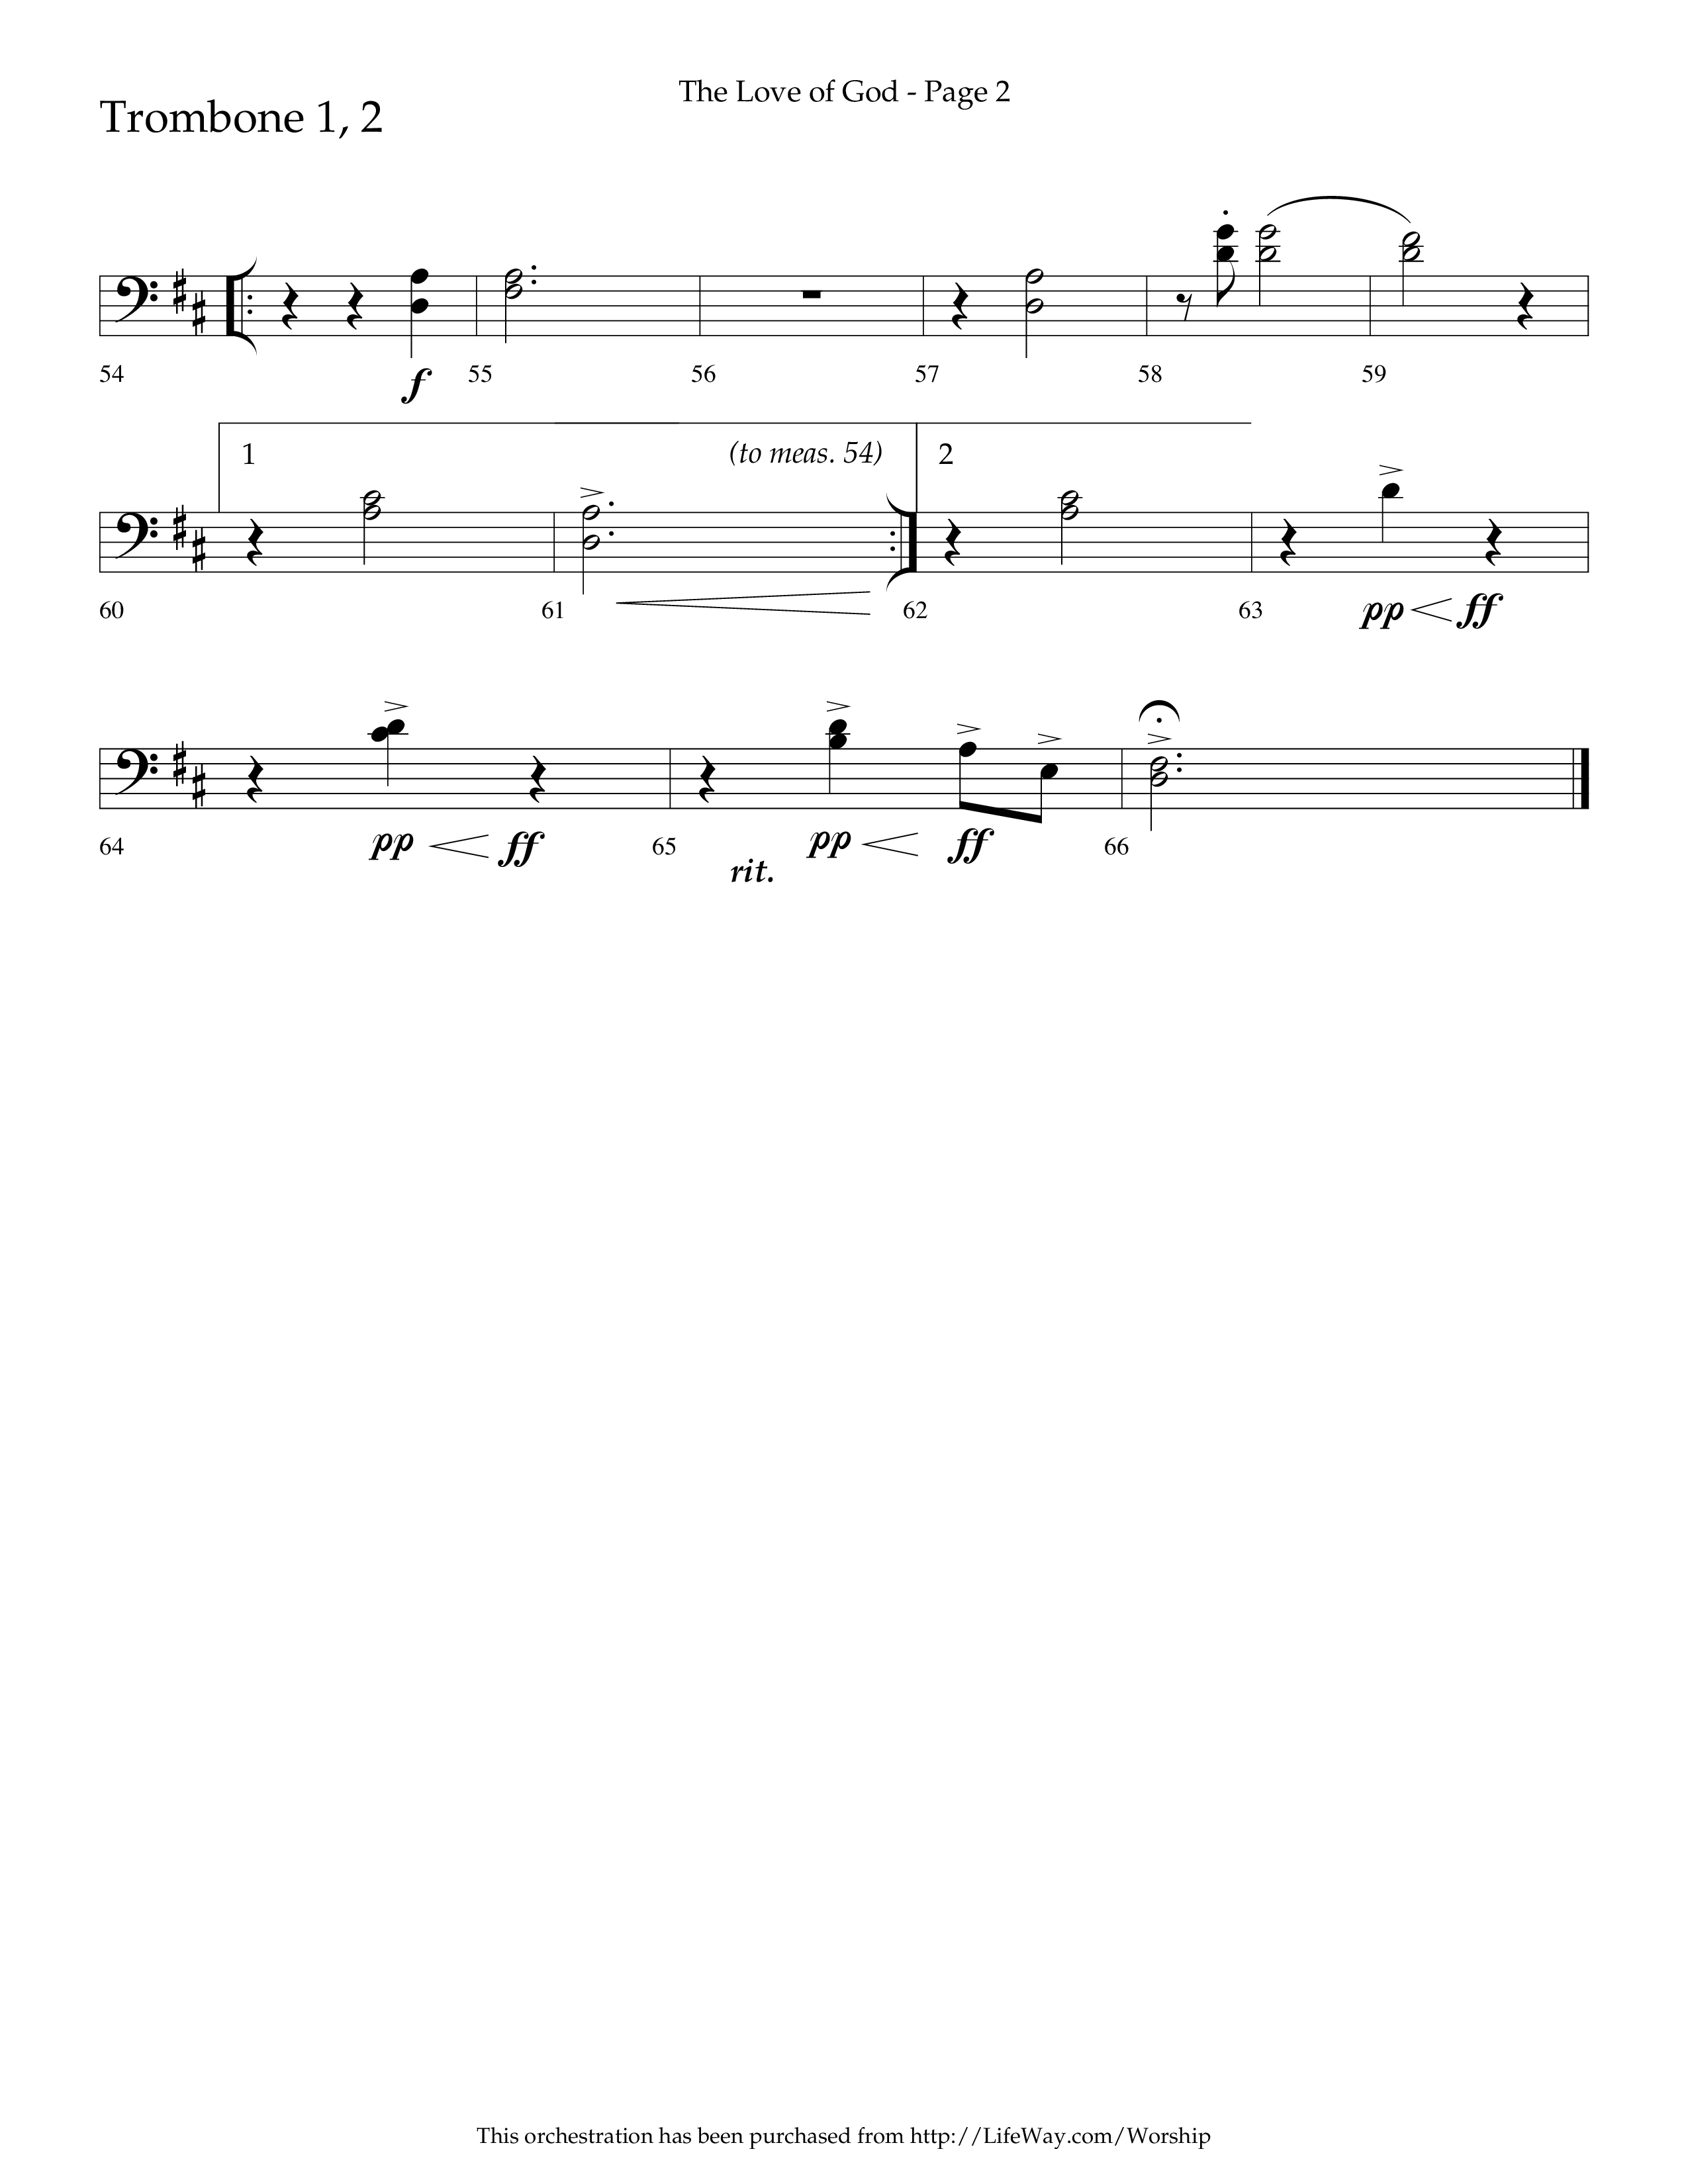 The Love of God (Choral Anthem SATB) Trombone 1/2 (Arr. Charlie Sinclair / Orch. Scott Harris / Lifeway Choral)